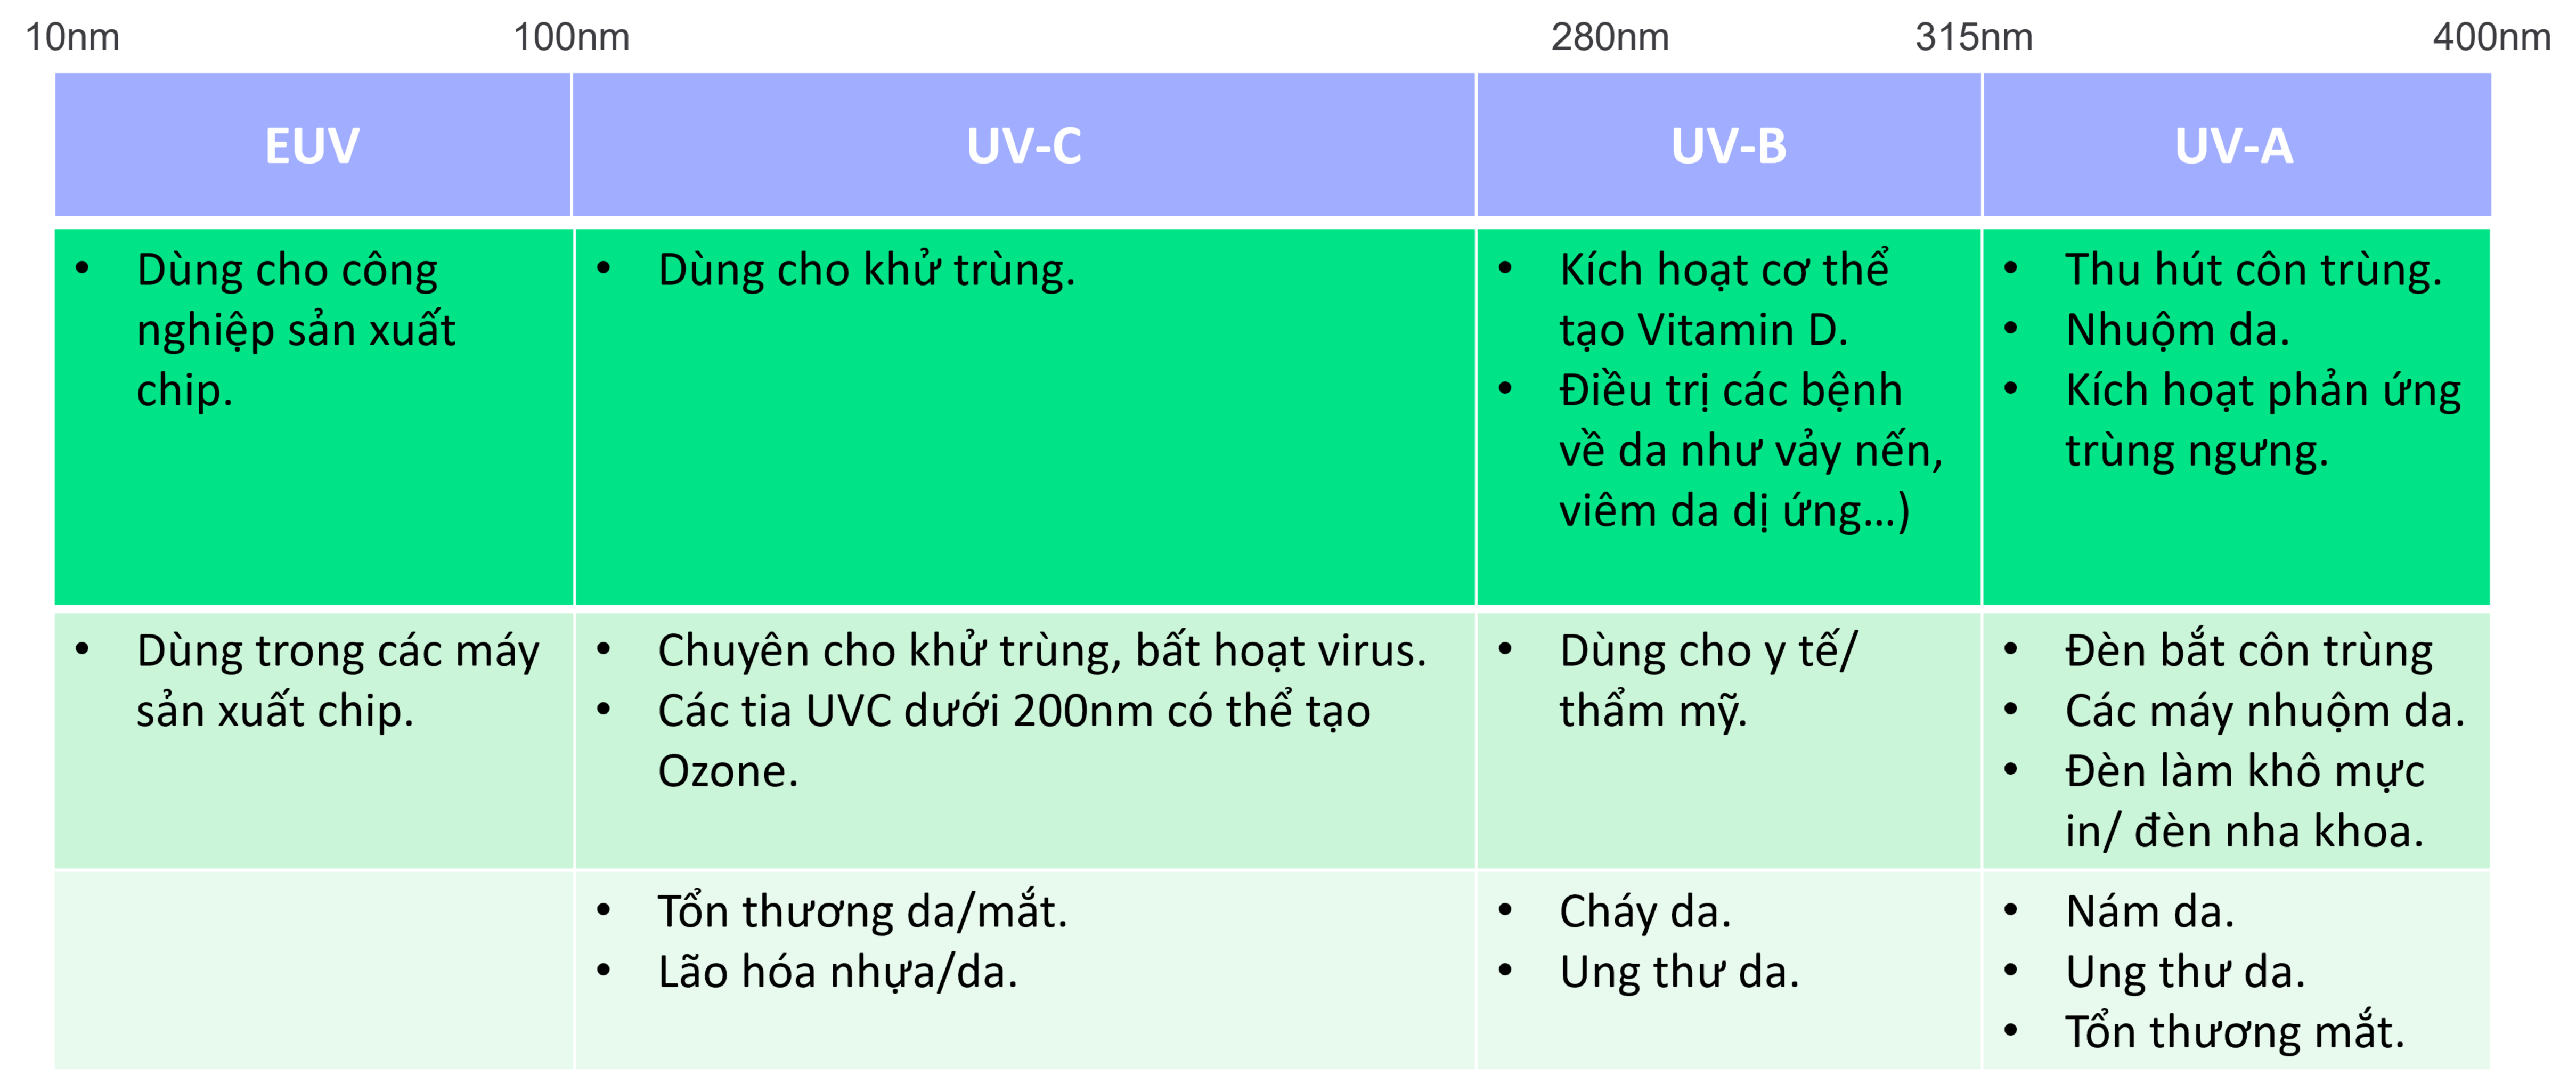 UV benefit.png